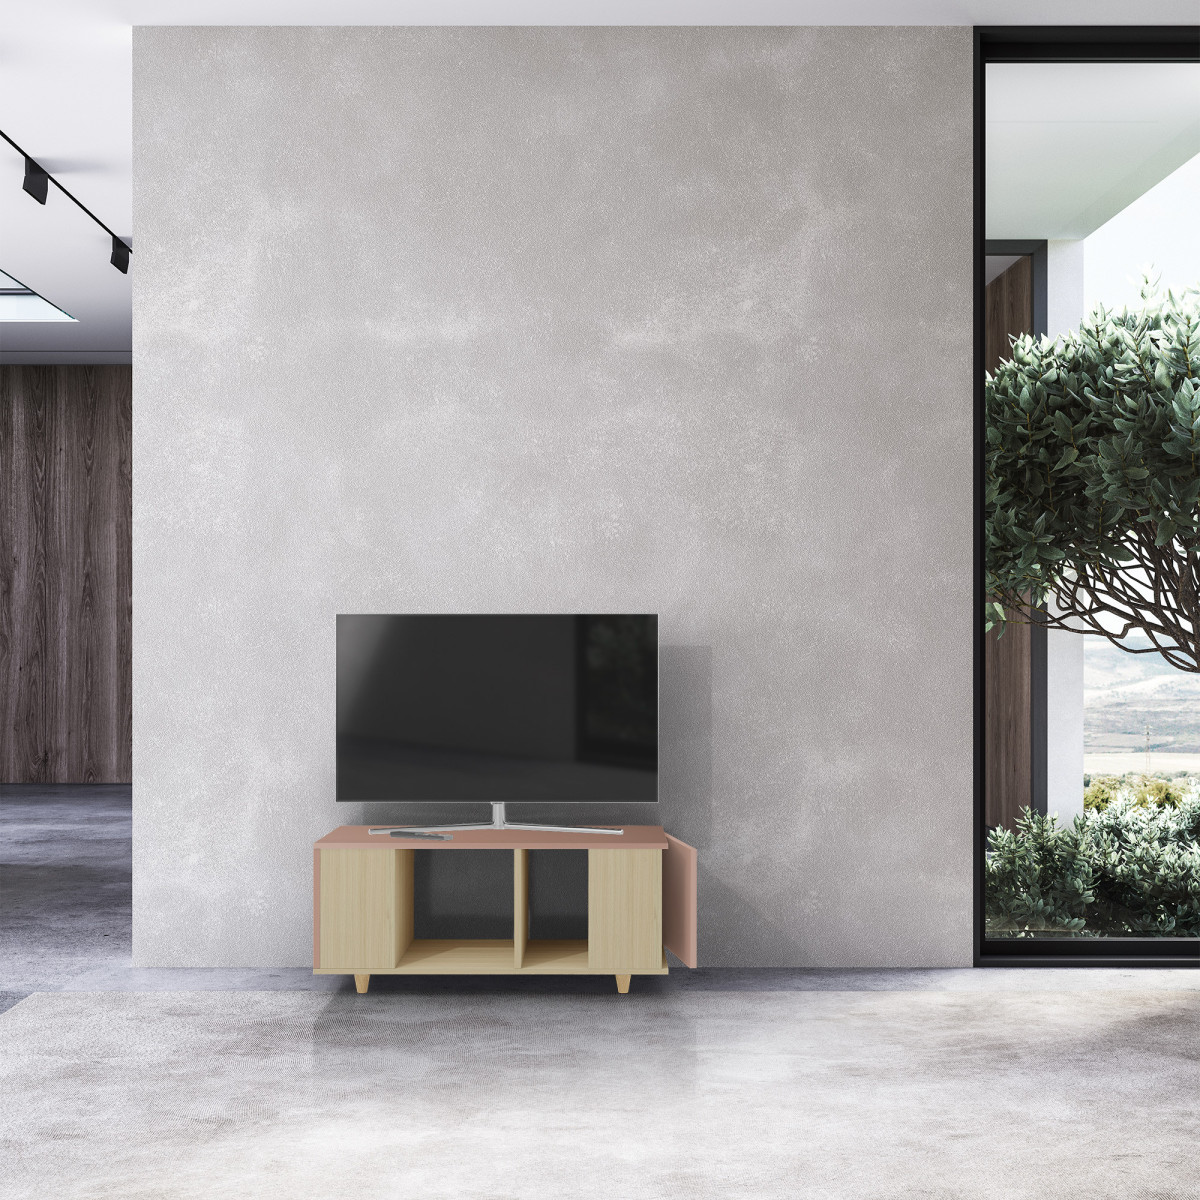 Grand meuble TV Chêne Clair - Abricot dans Grand meuble TV par YZON